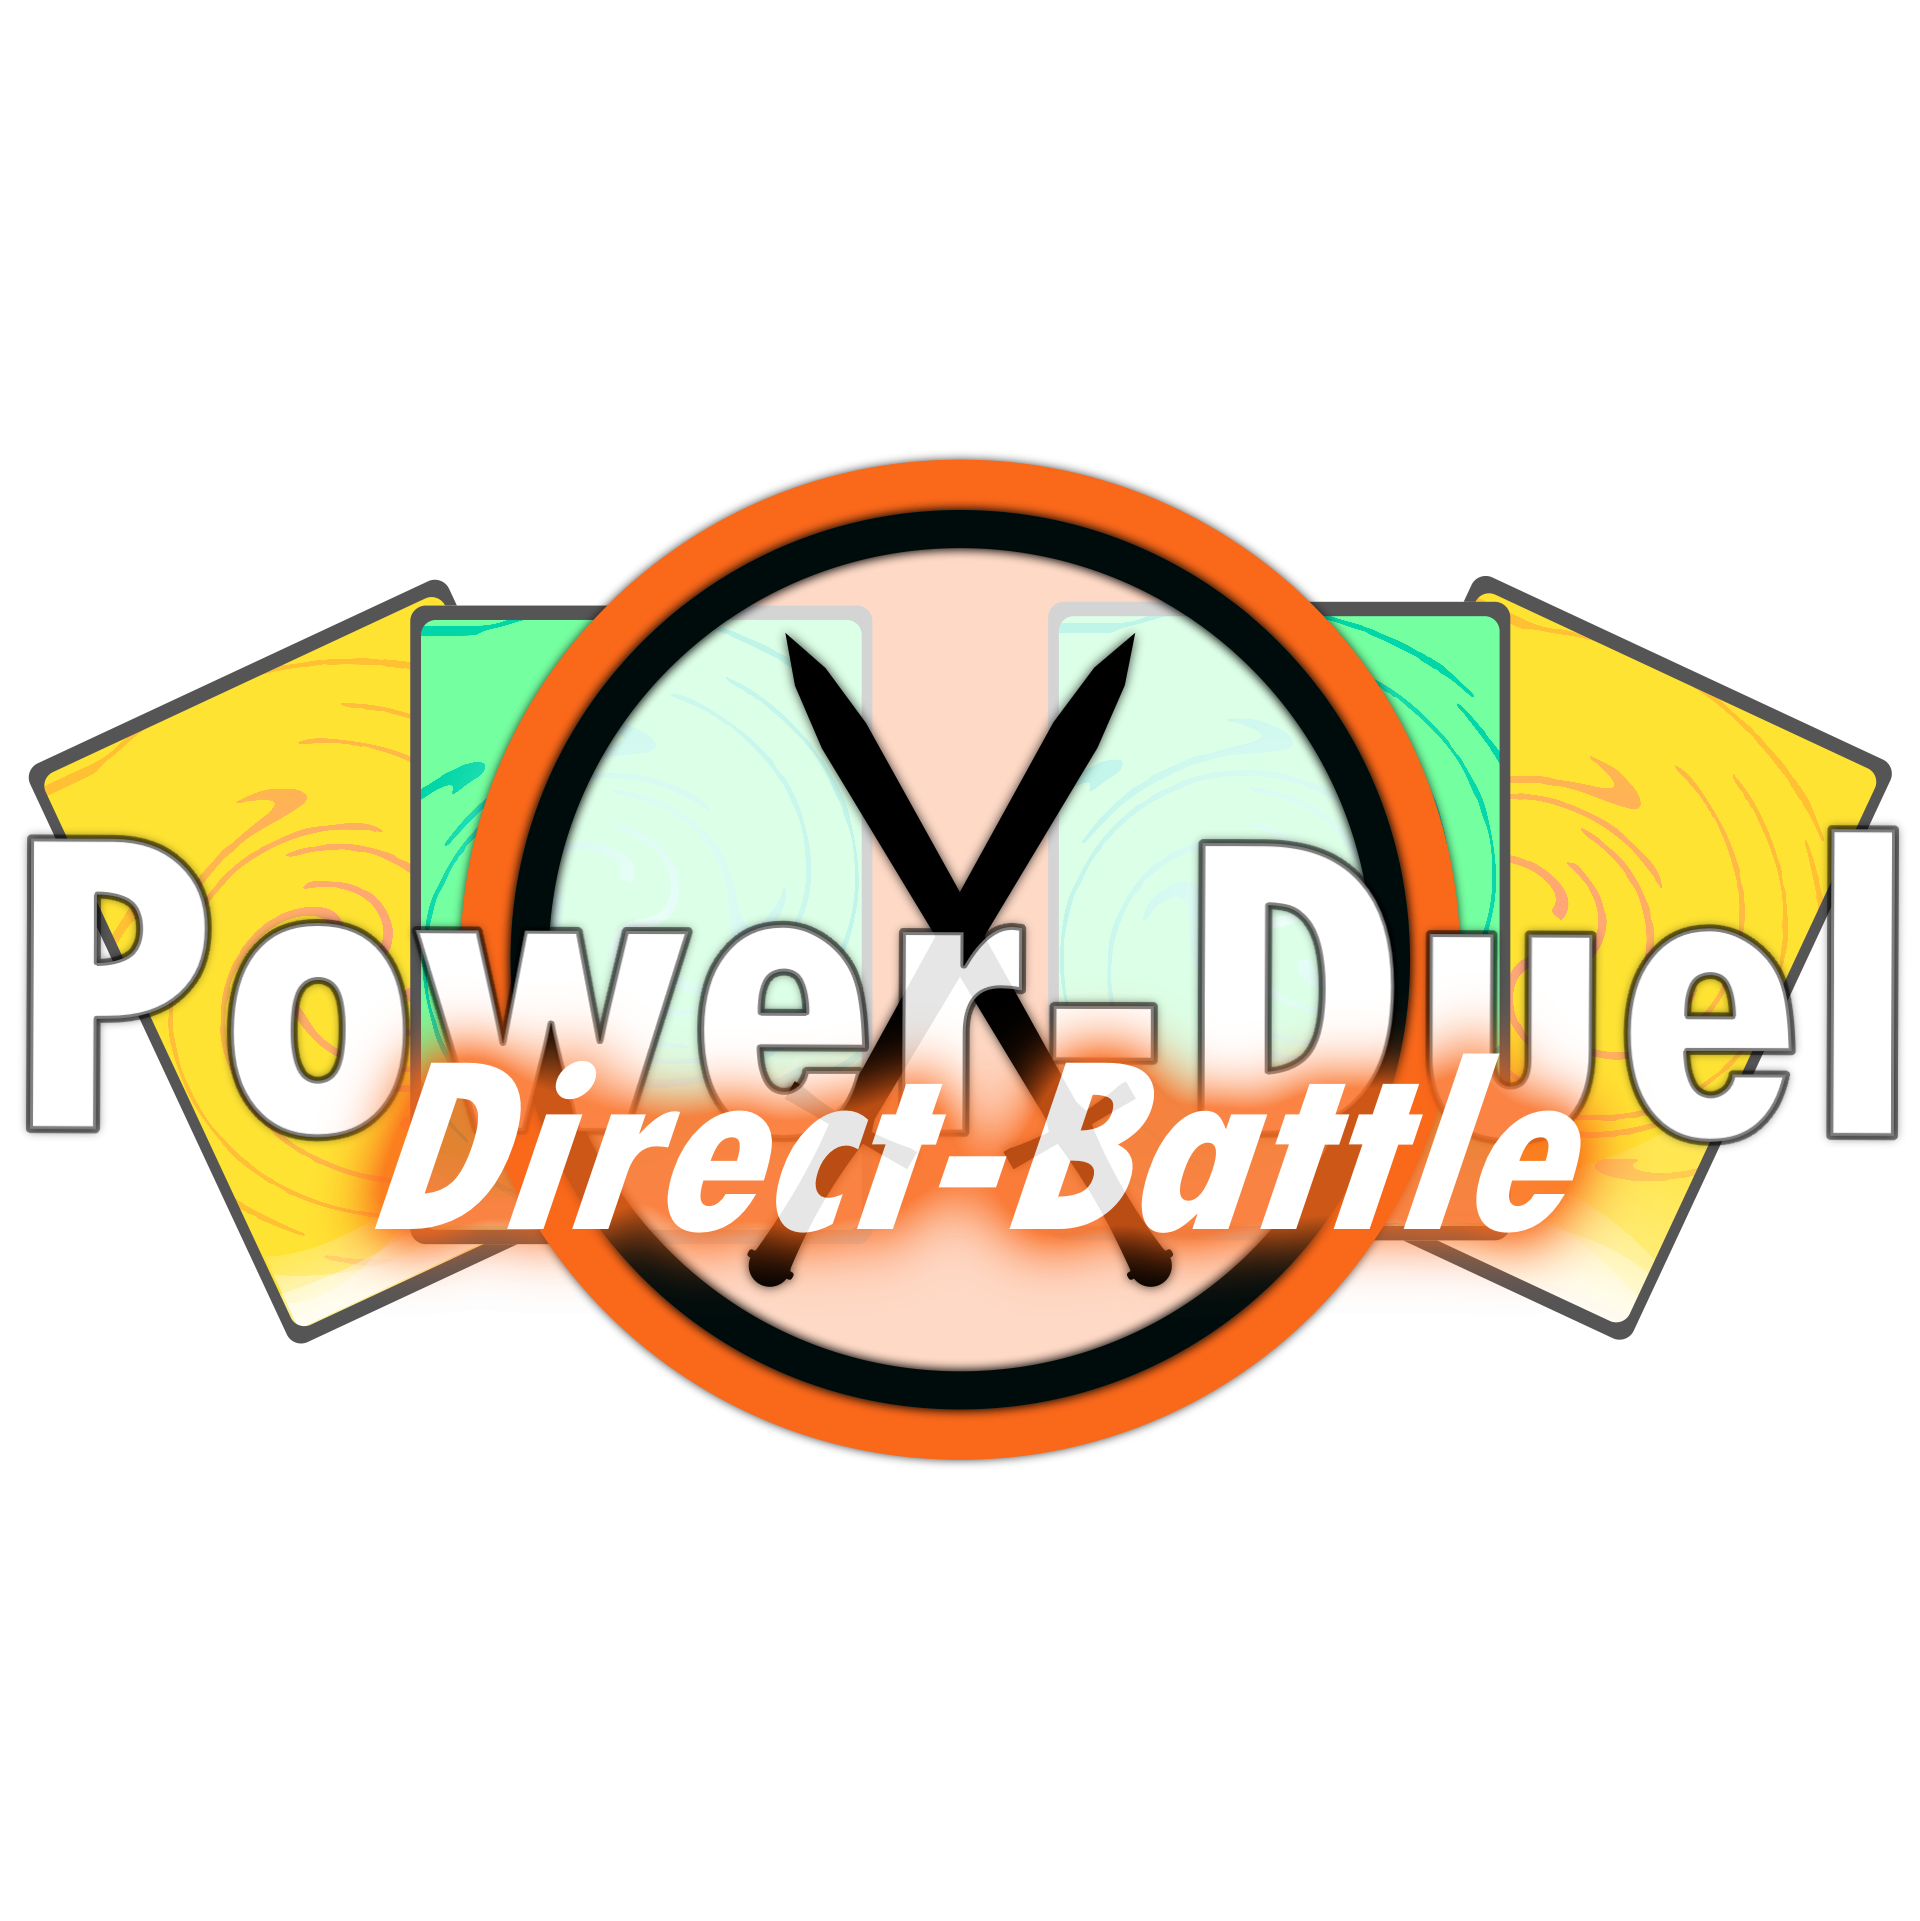 Power-Duel Direct-Battle